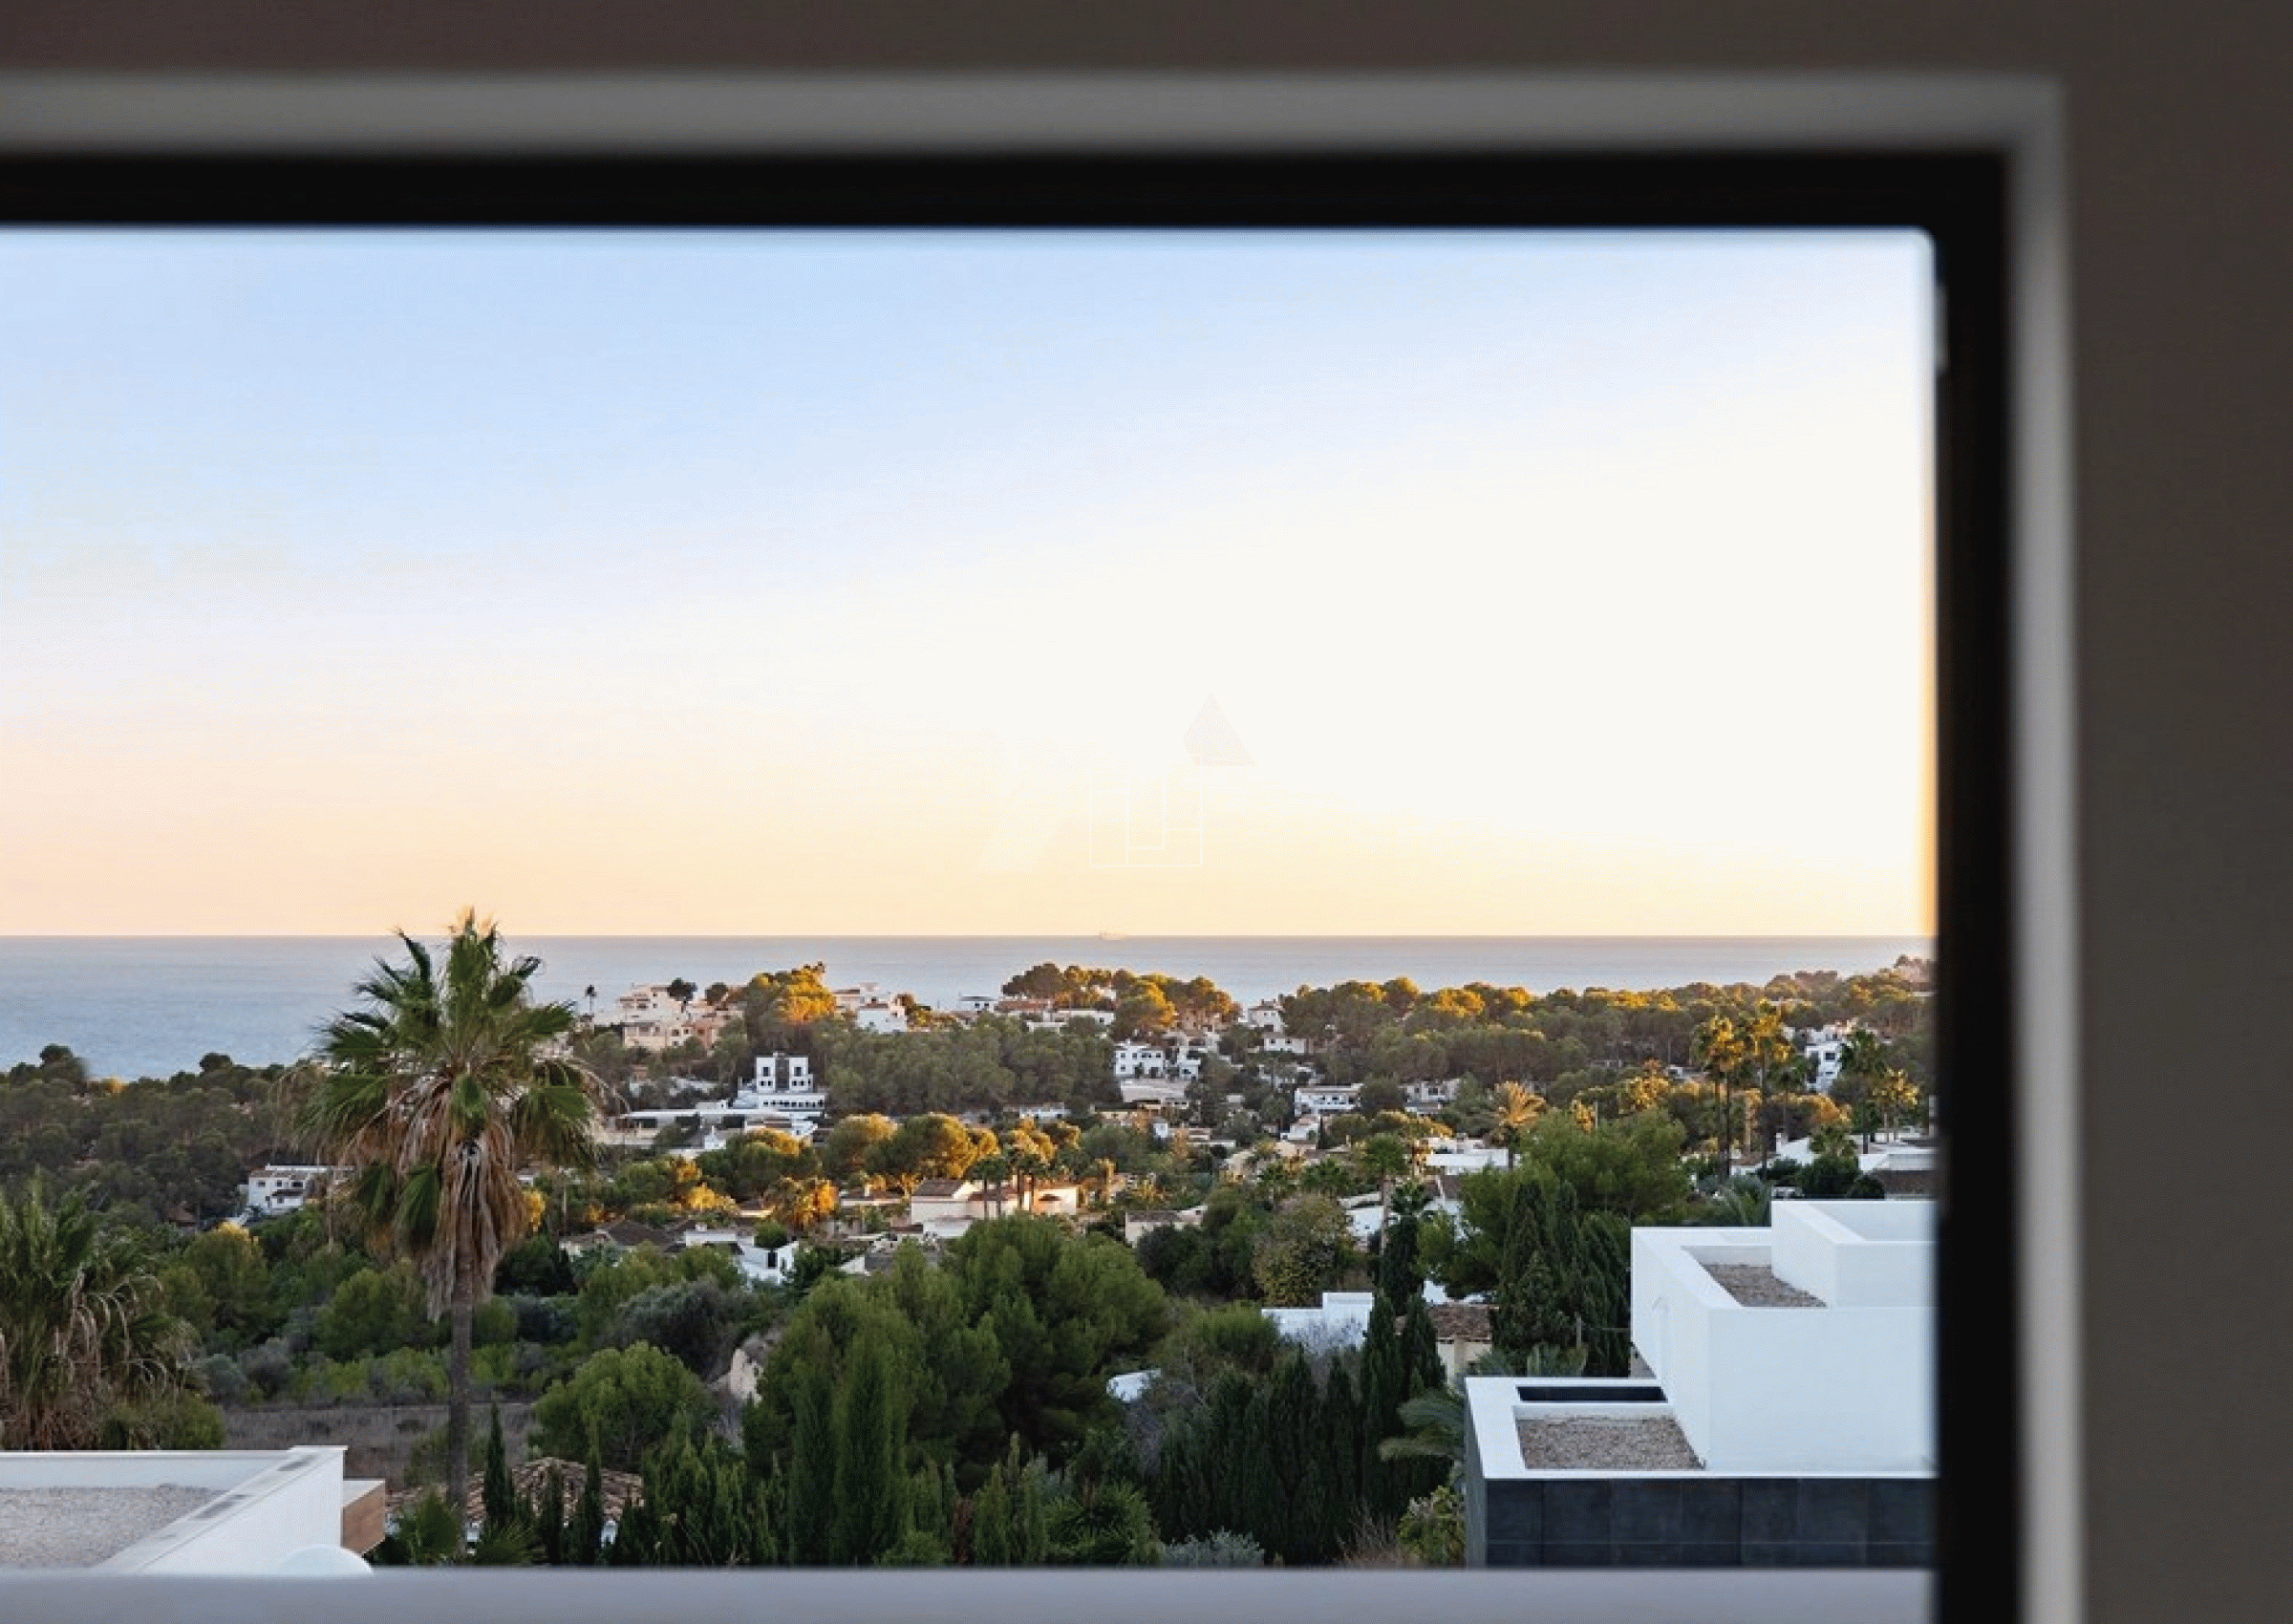 South facing newly built Ibiza style villa with sea view in Moraira
BP